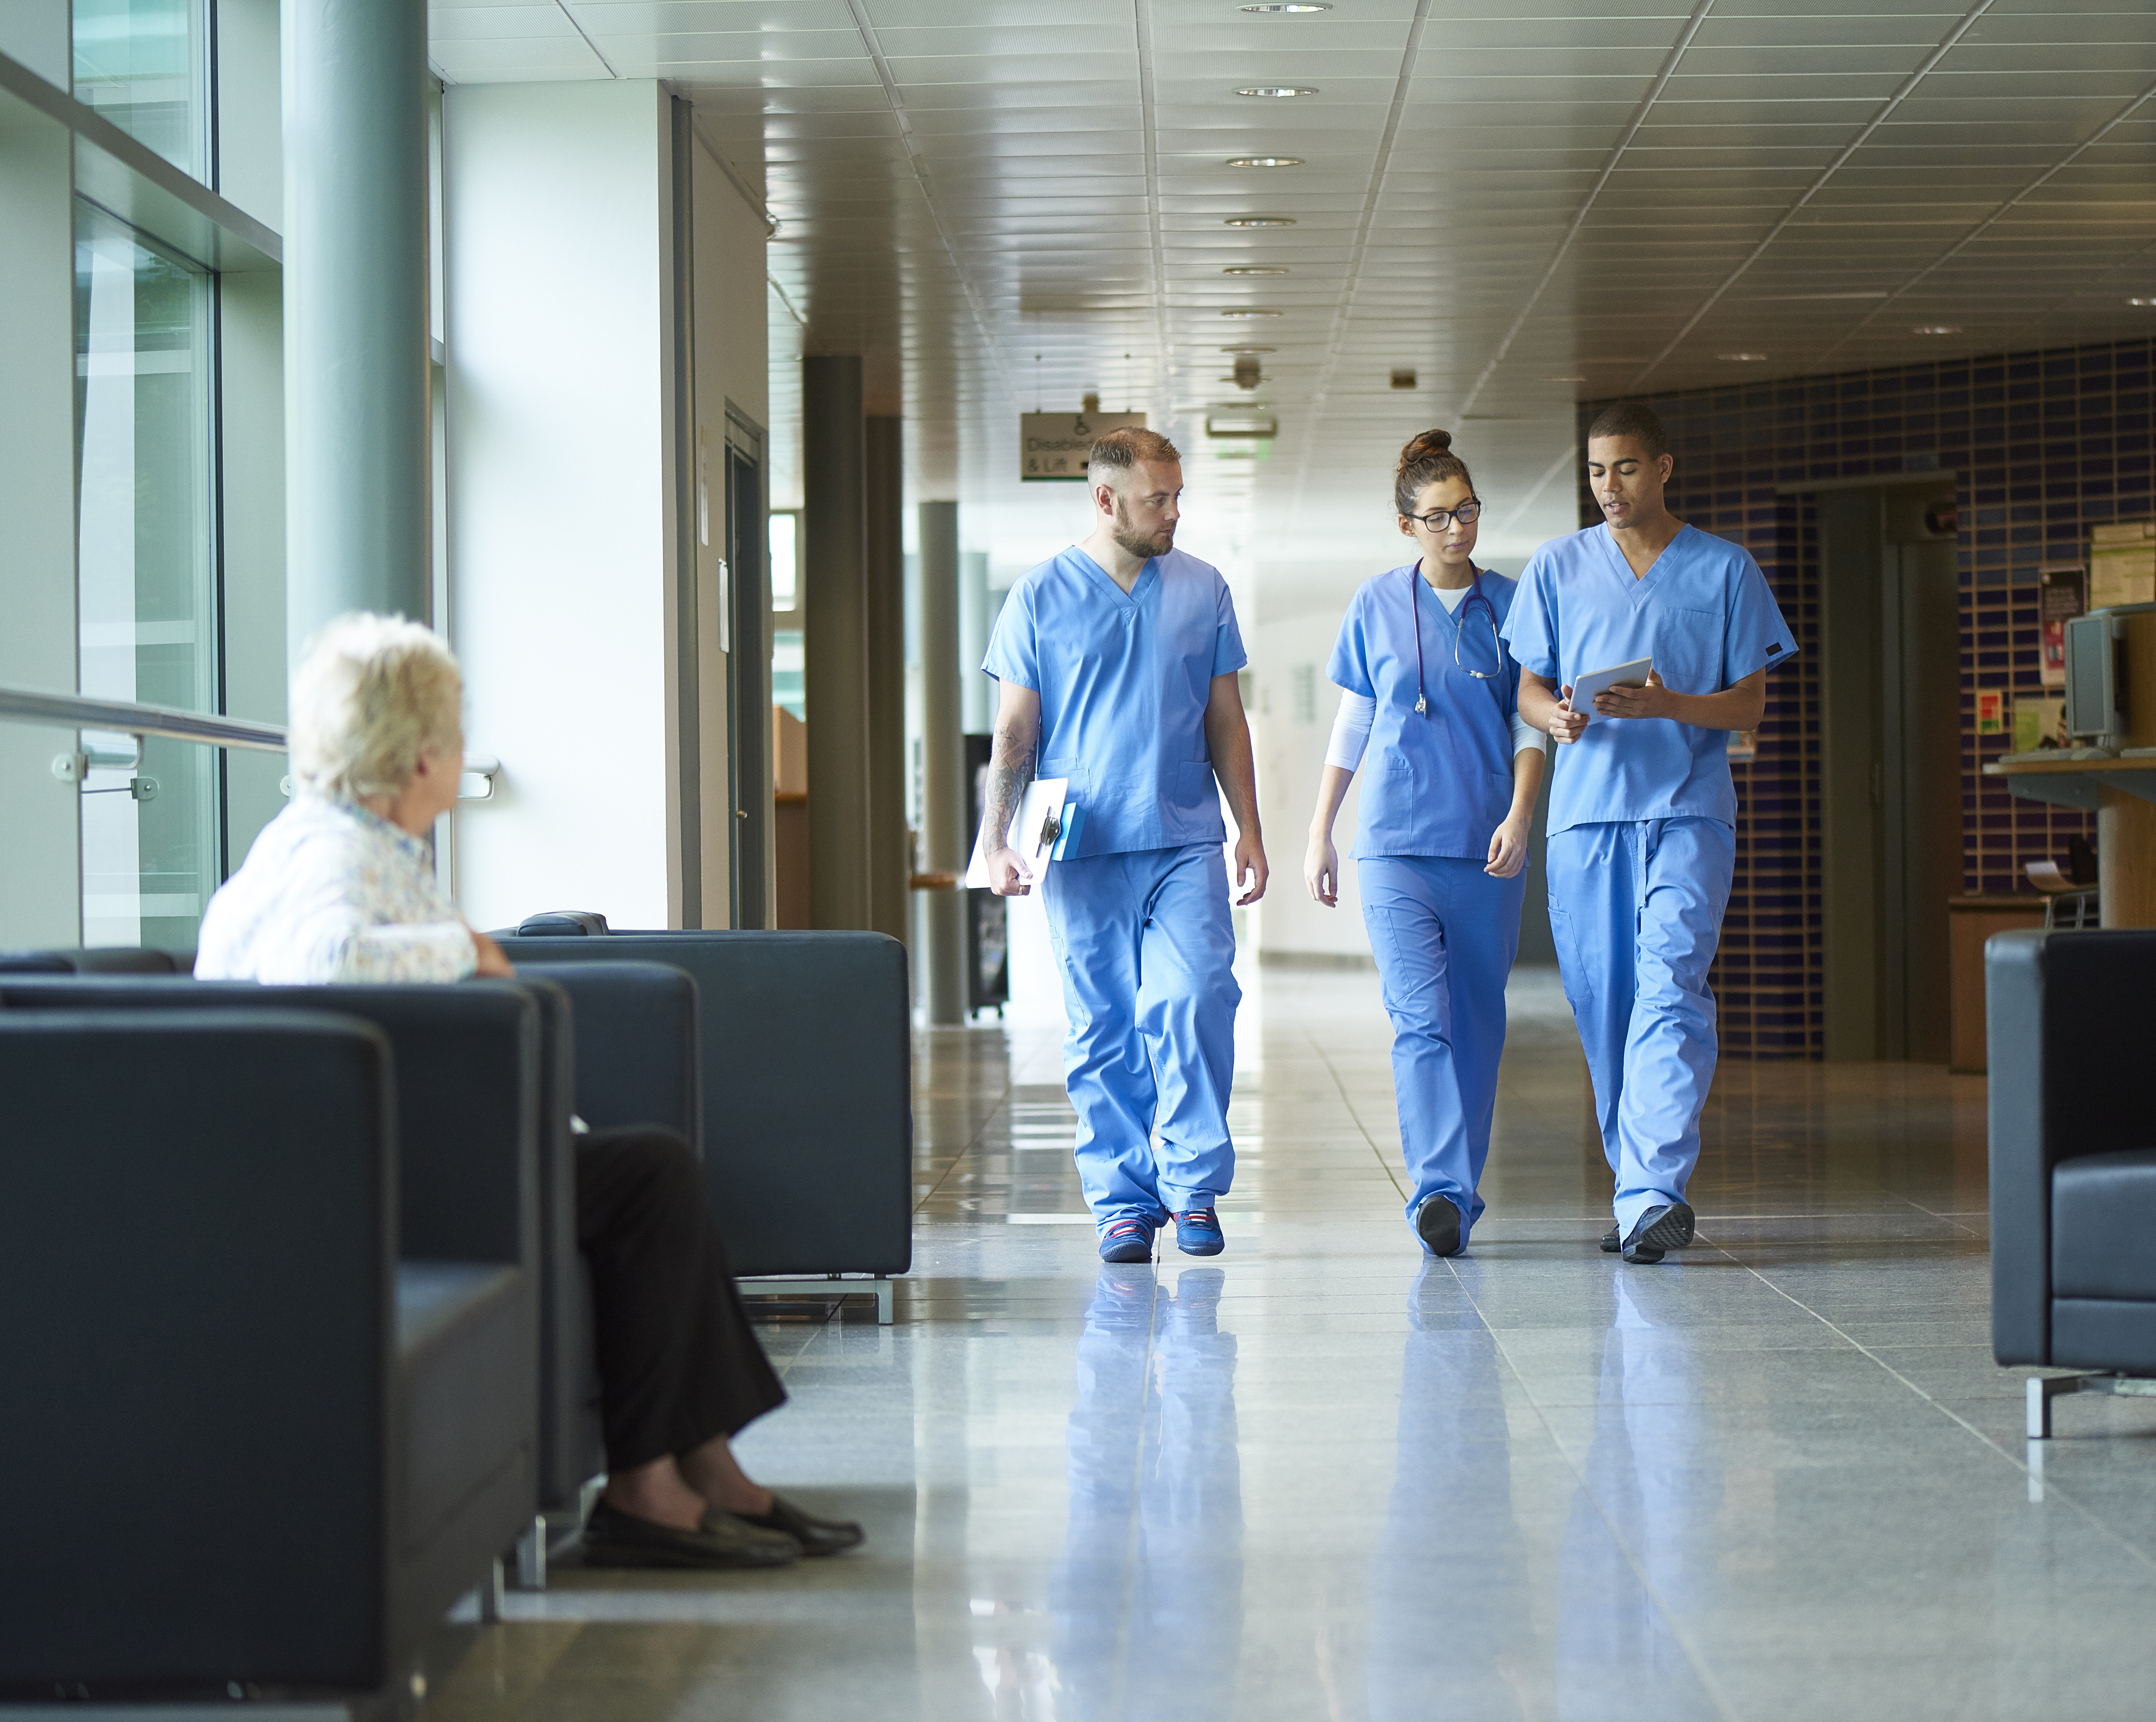 Group of Doctors walking down a hospital corridor.